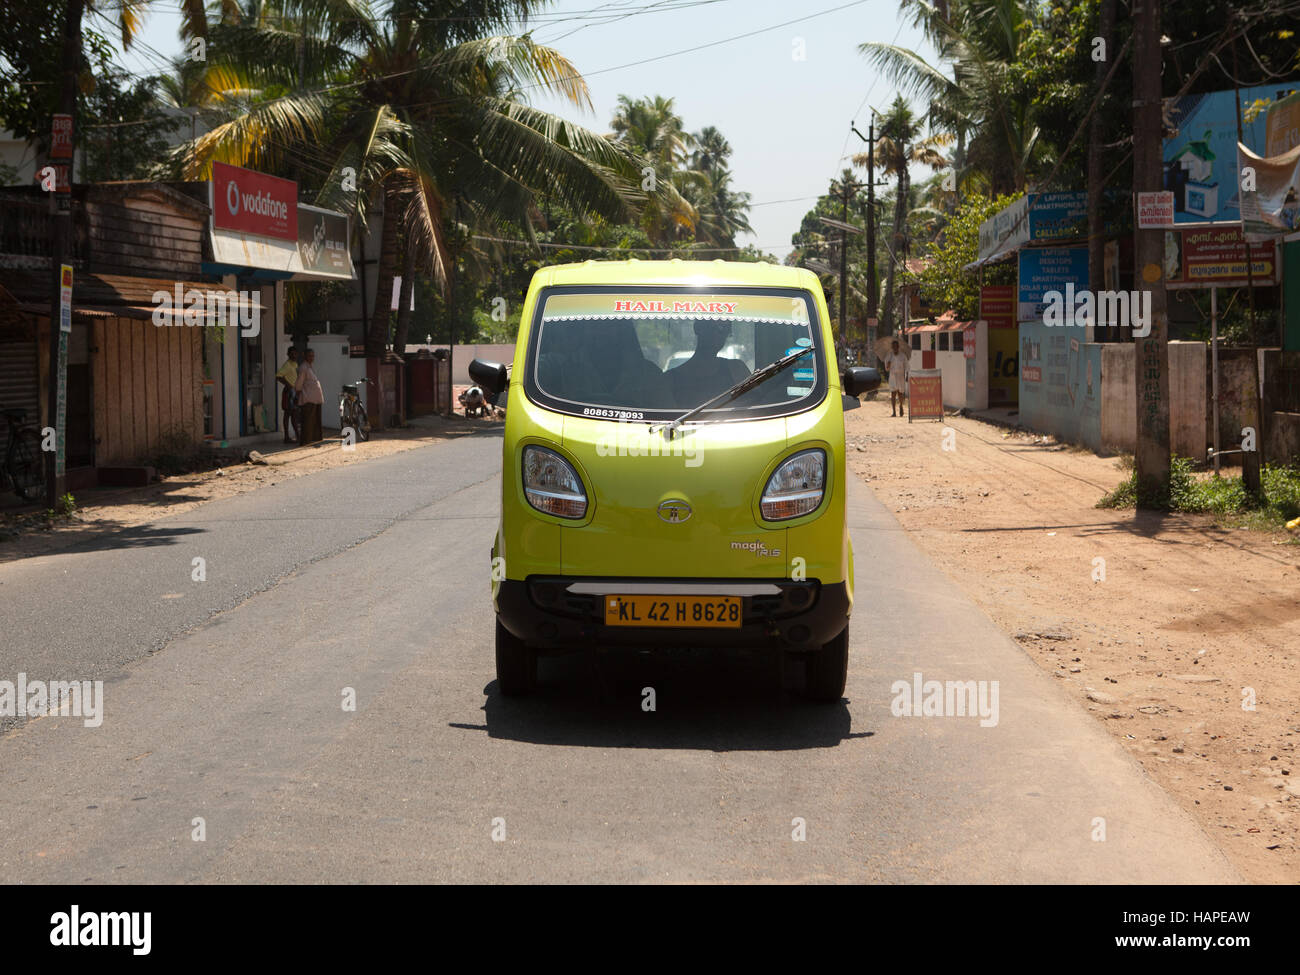 New Tata auto rickshaw taxi in Kerala, India Stock Photo